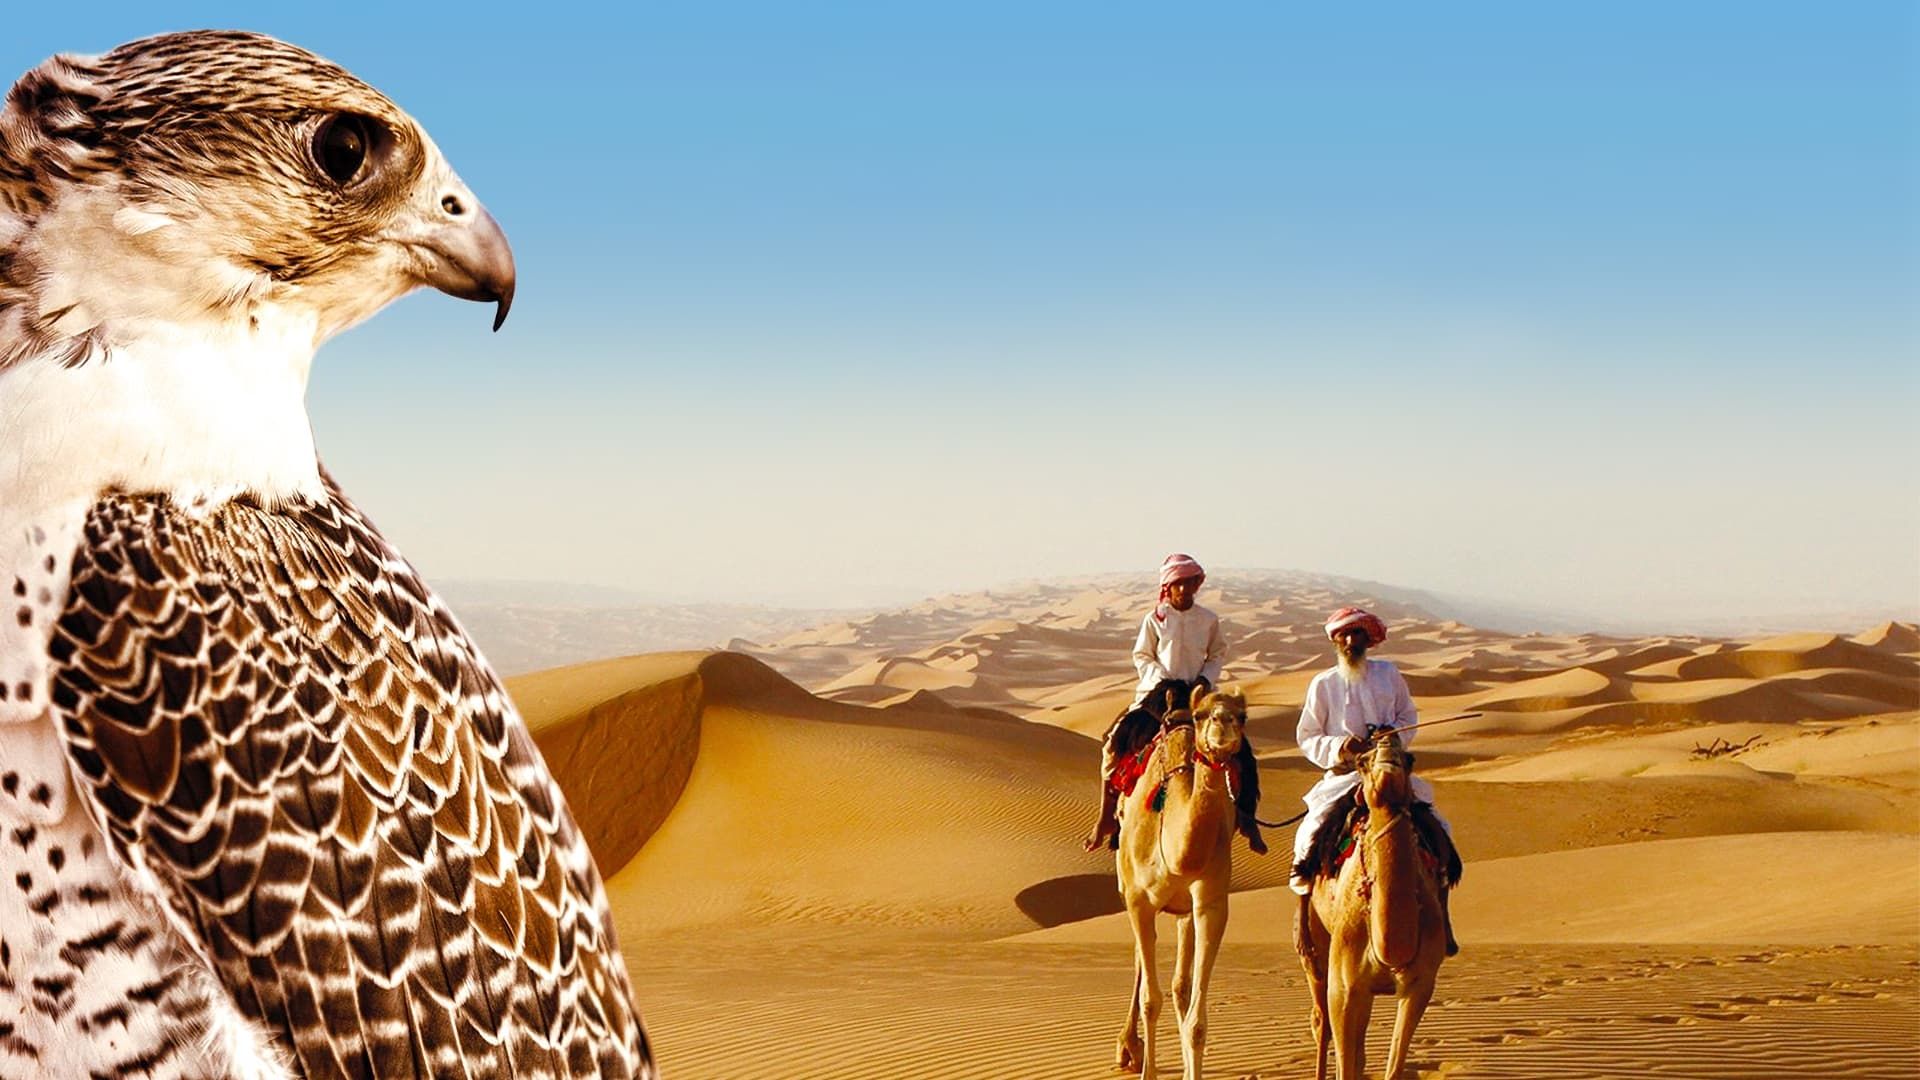 Wild Arabia background